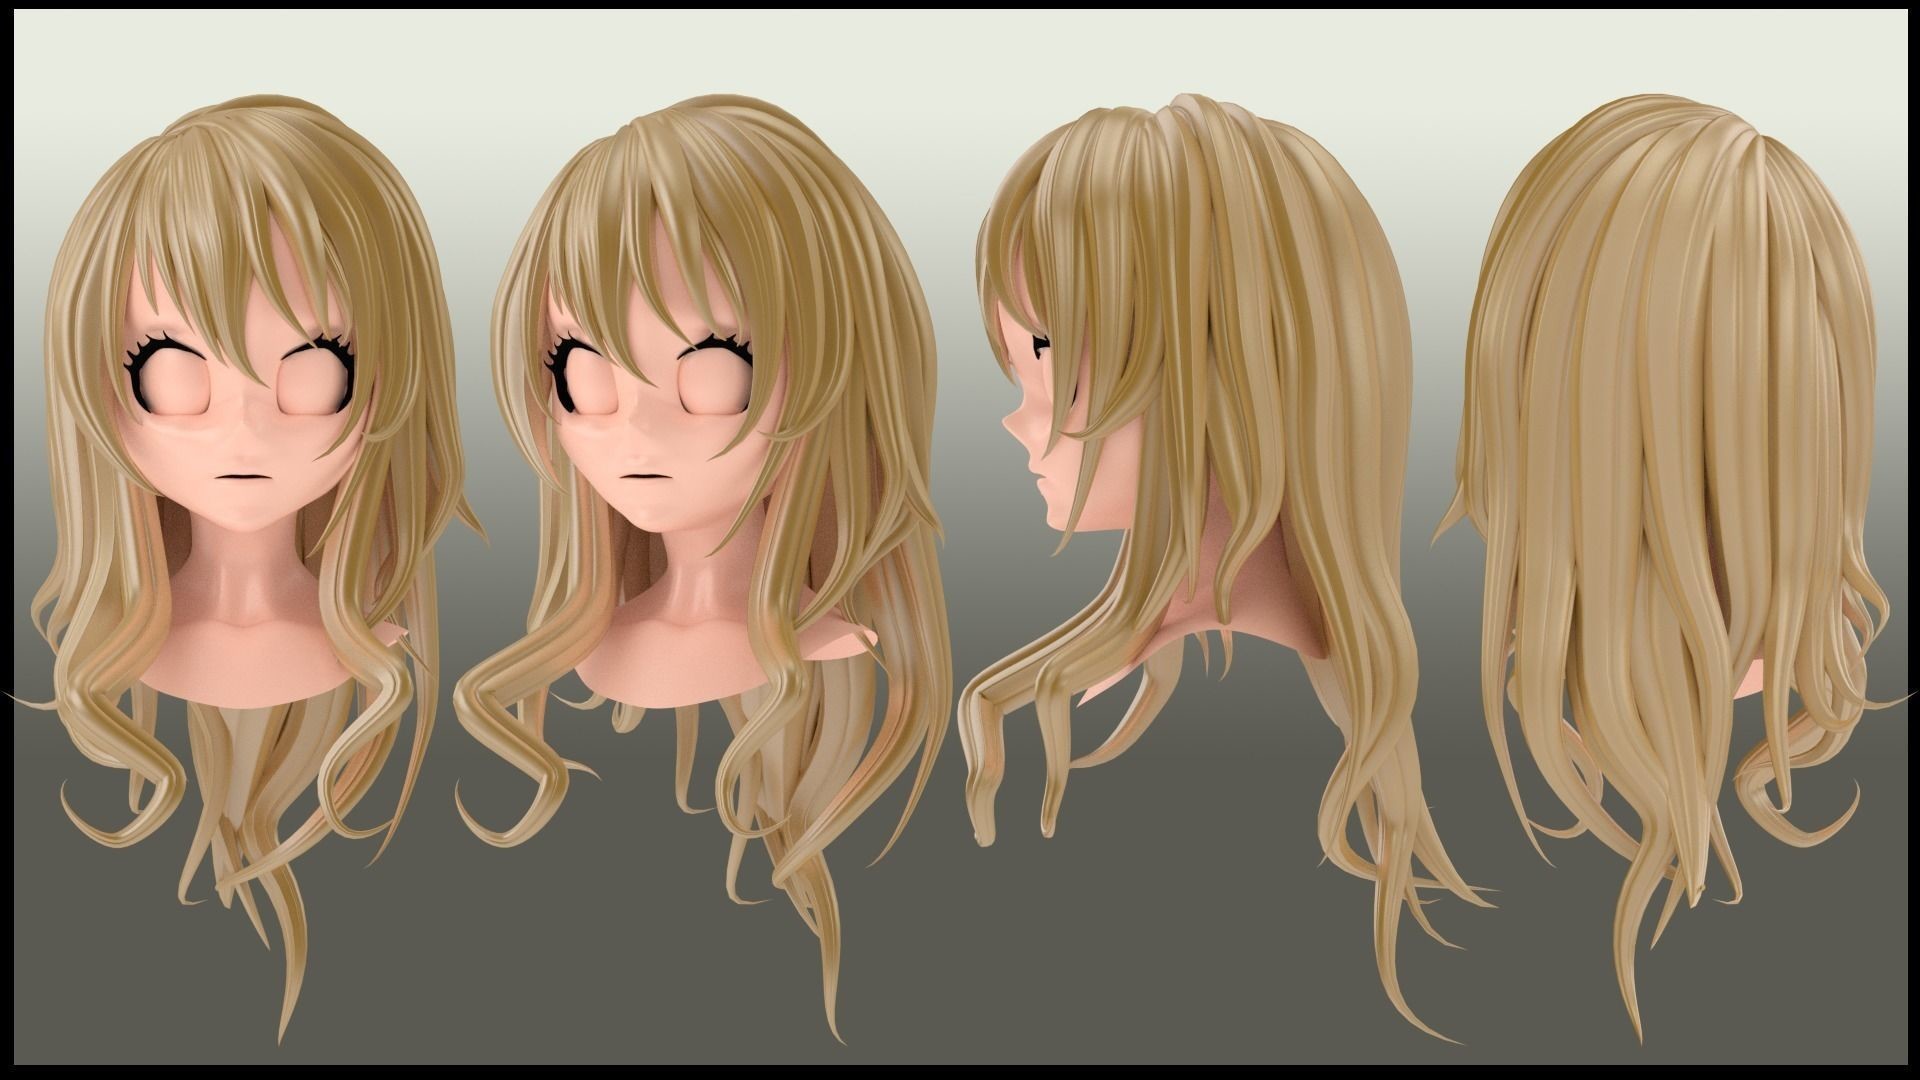 ArtStation - 3D Hair modeling (Game Assets)